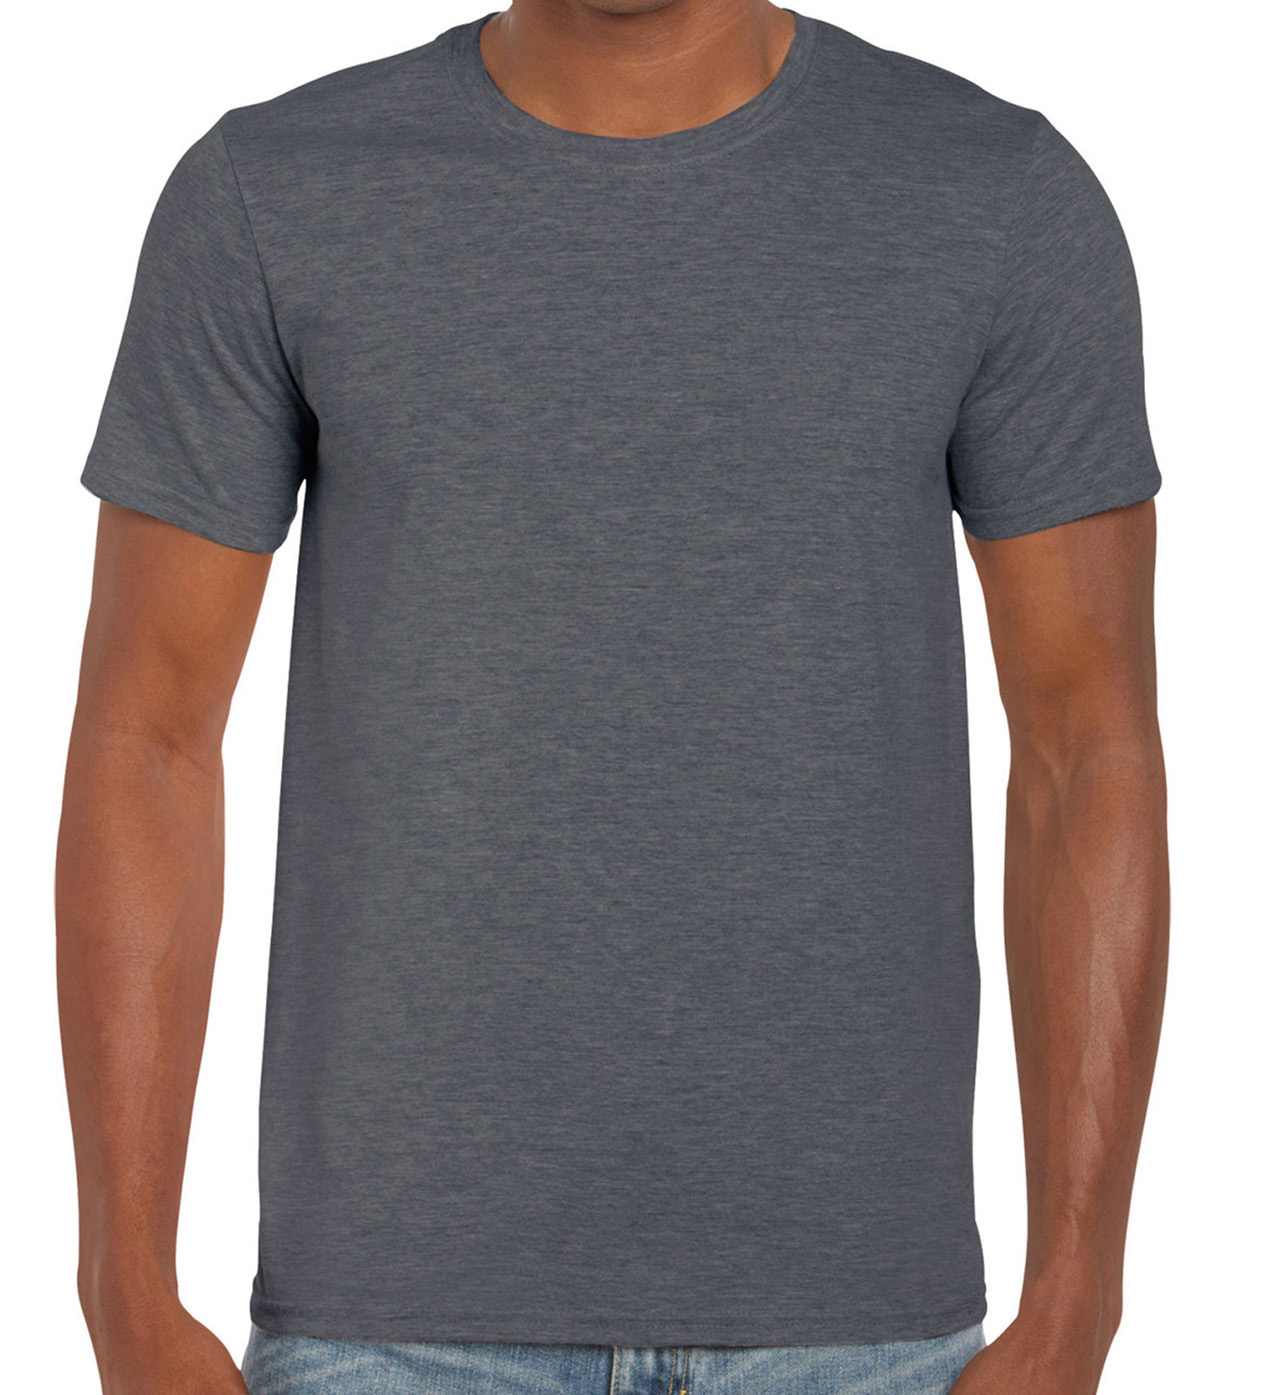 Gildan Soft Style Shirt Size Chart